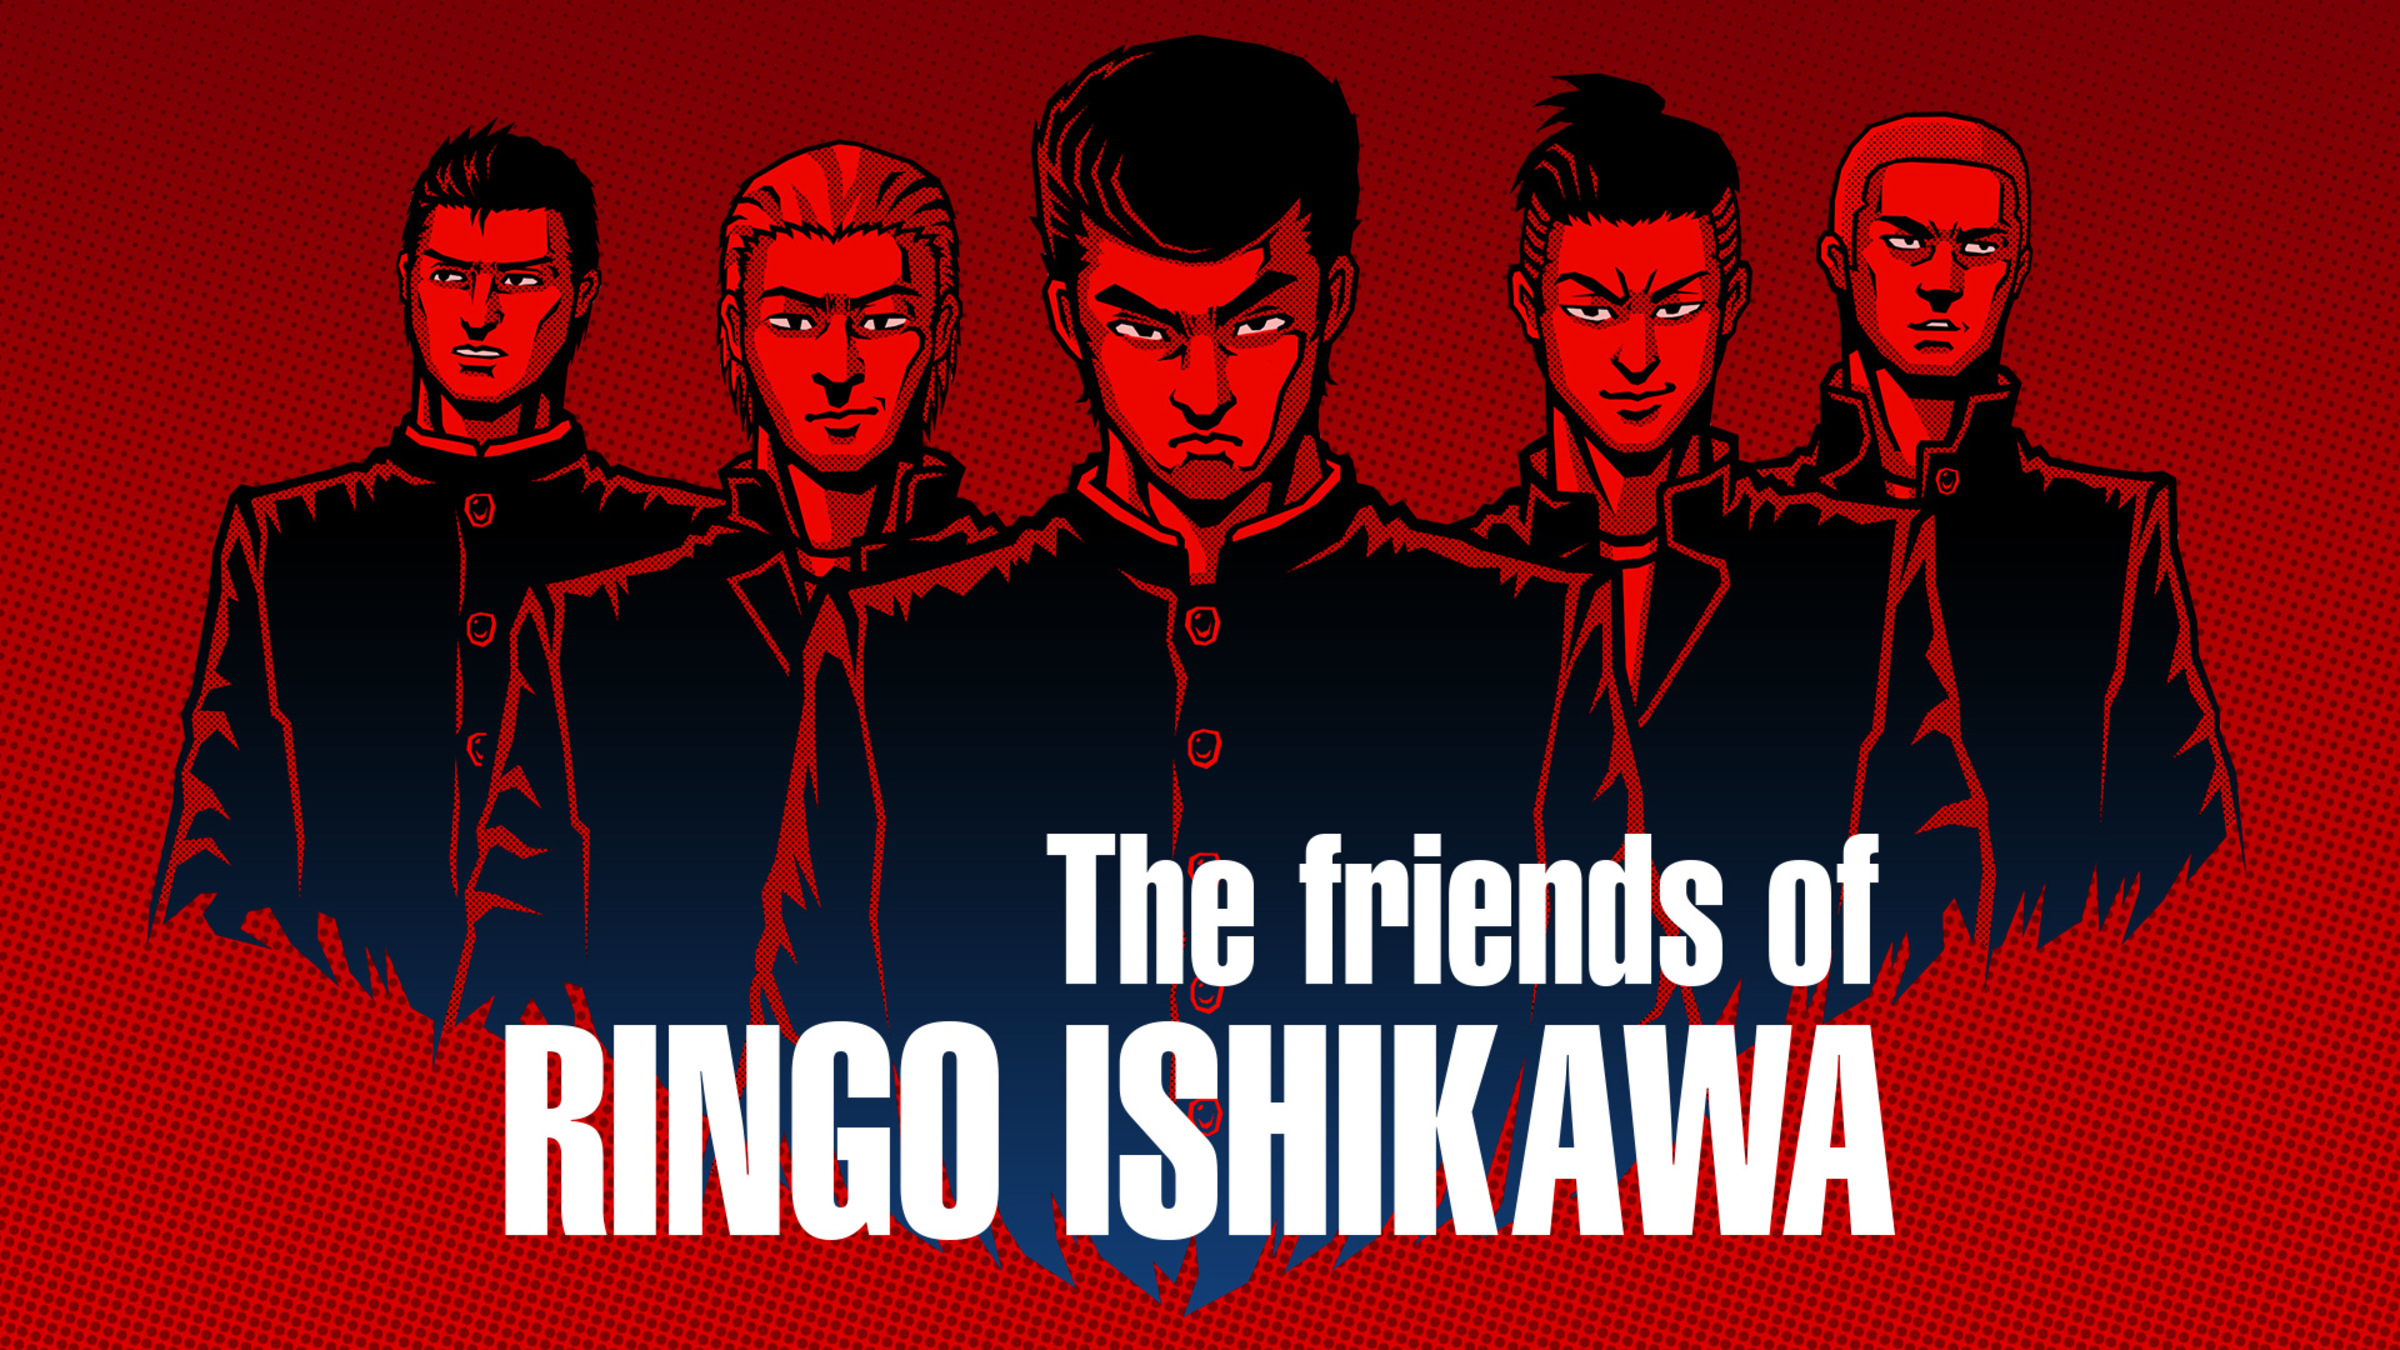 The friends of ringo. Ringo Ishikawa. The friends of Ringo Ishikawa Art. The friends of Ringo Ishikawa Ringo.